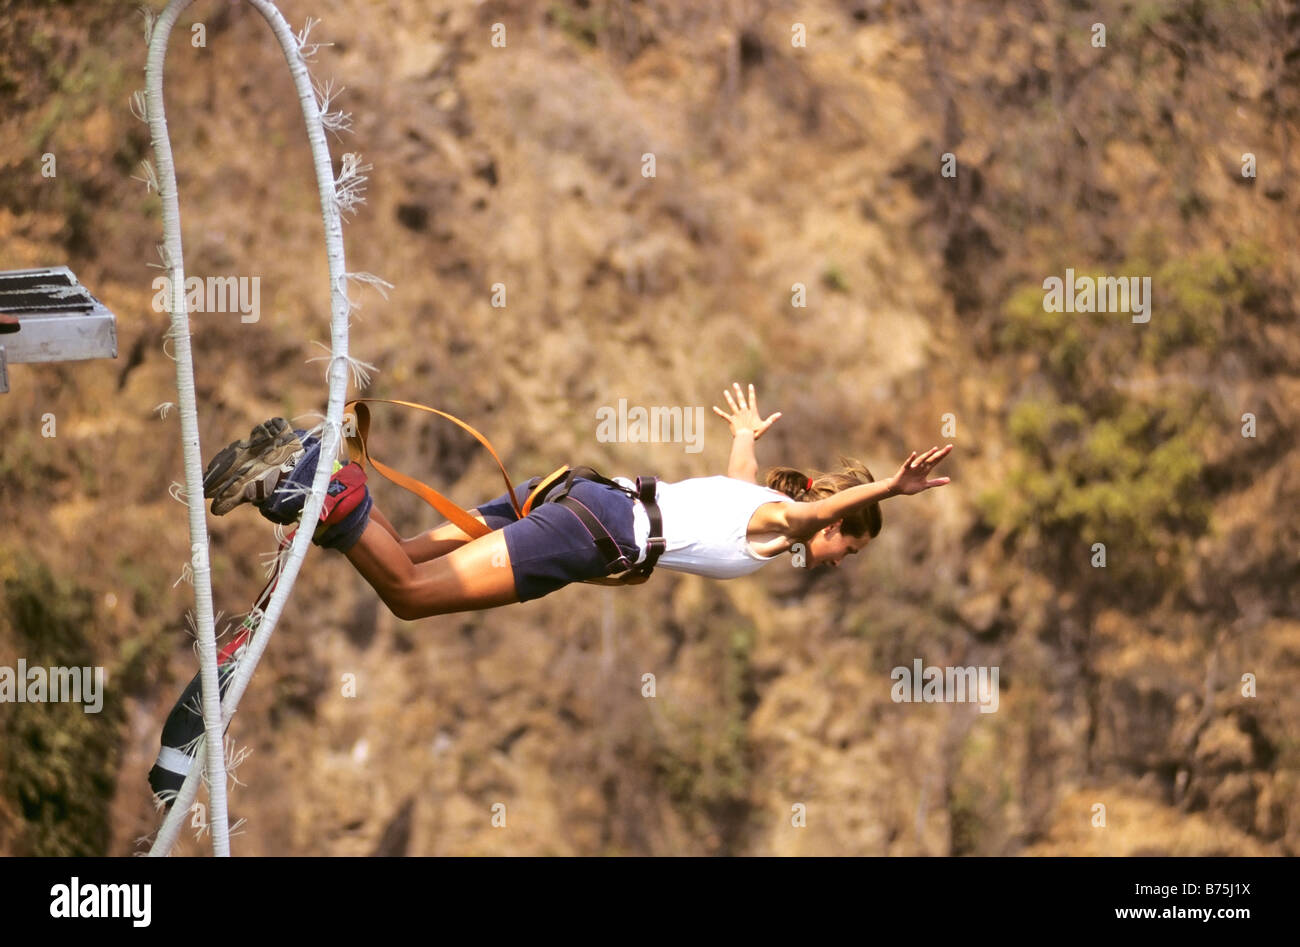 Bunji Jumping holliday aventure sensations fortes chutes Victoria Zimbabwe Afrique du pont Banque D'Images